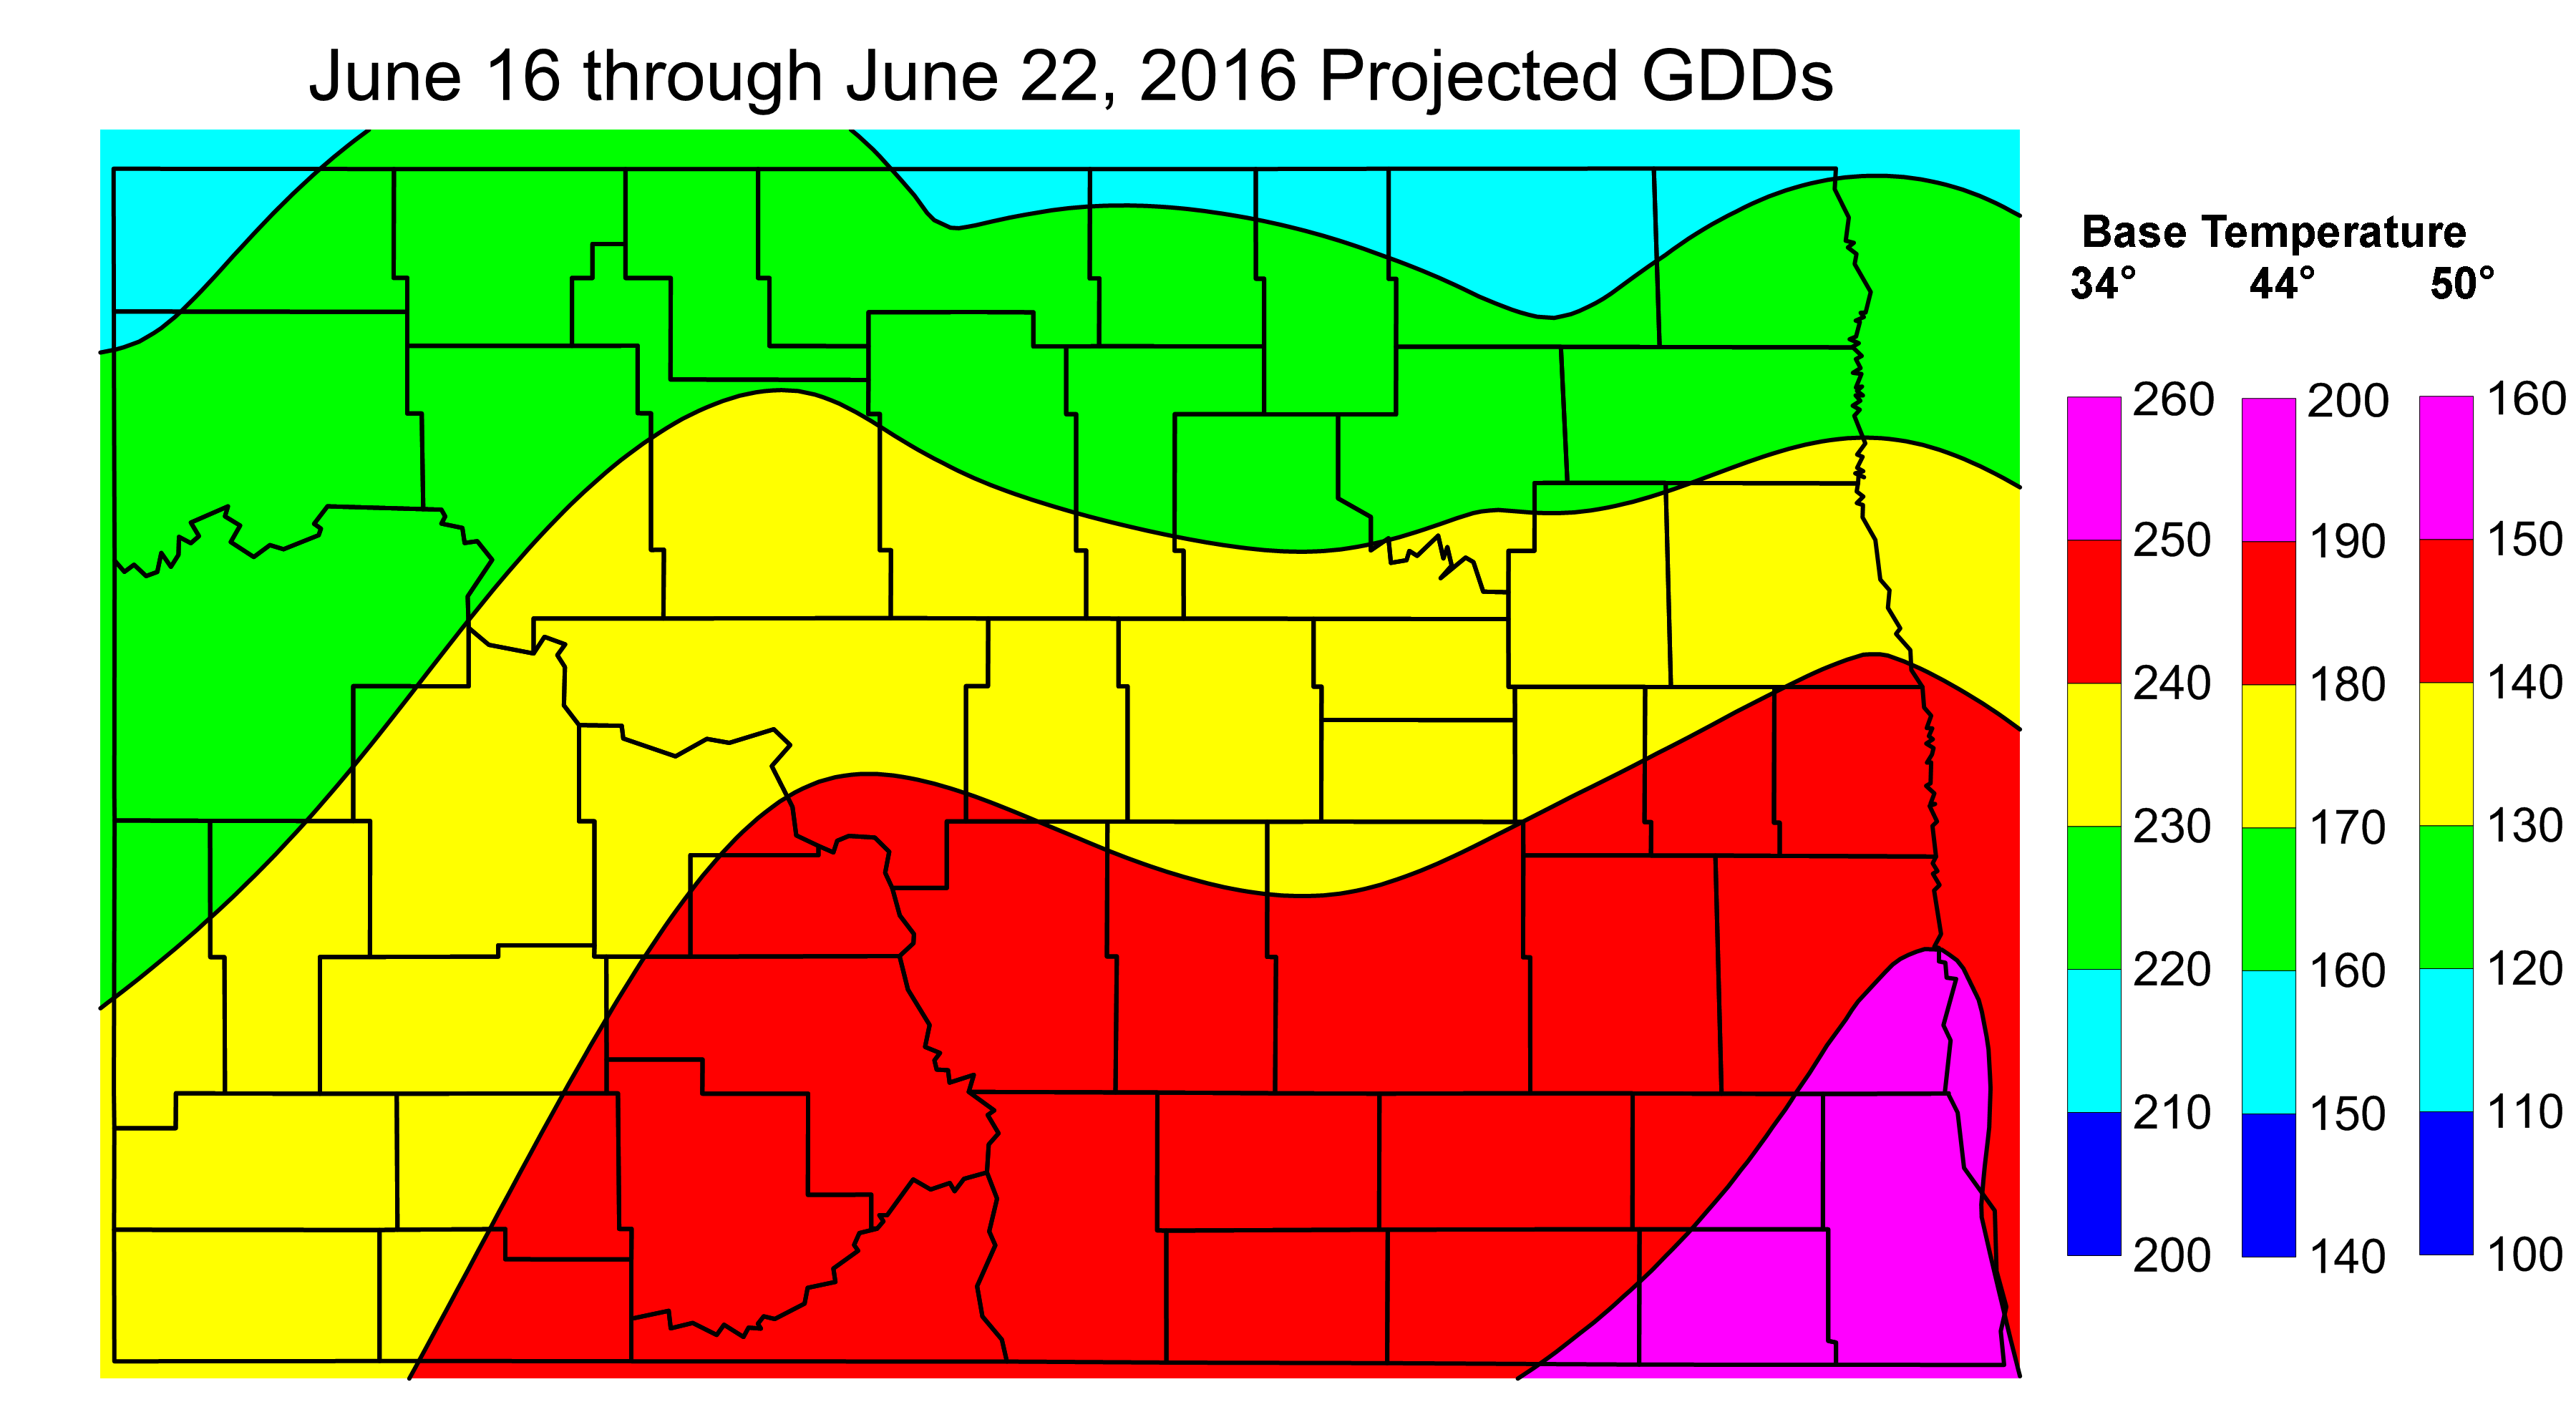 June 16-22, 2016 Estimated GDDs